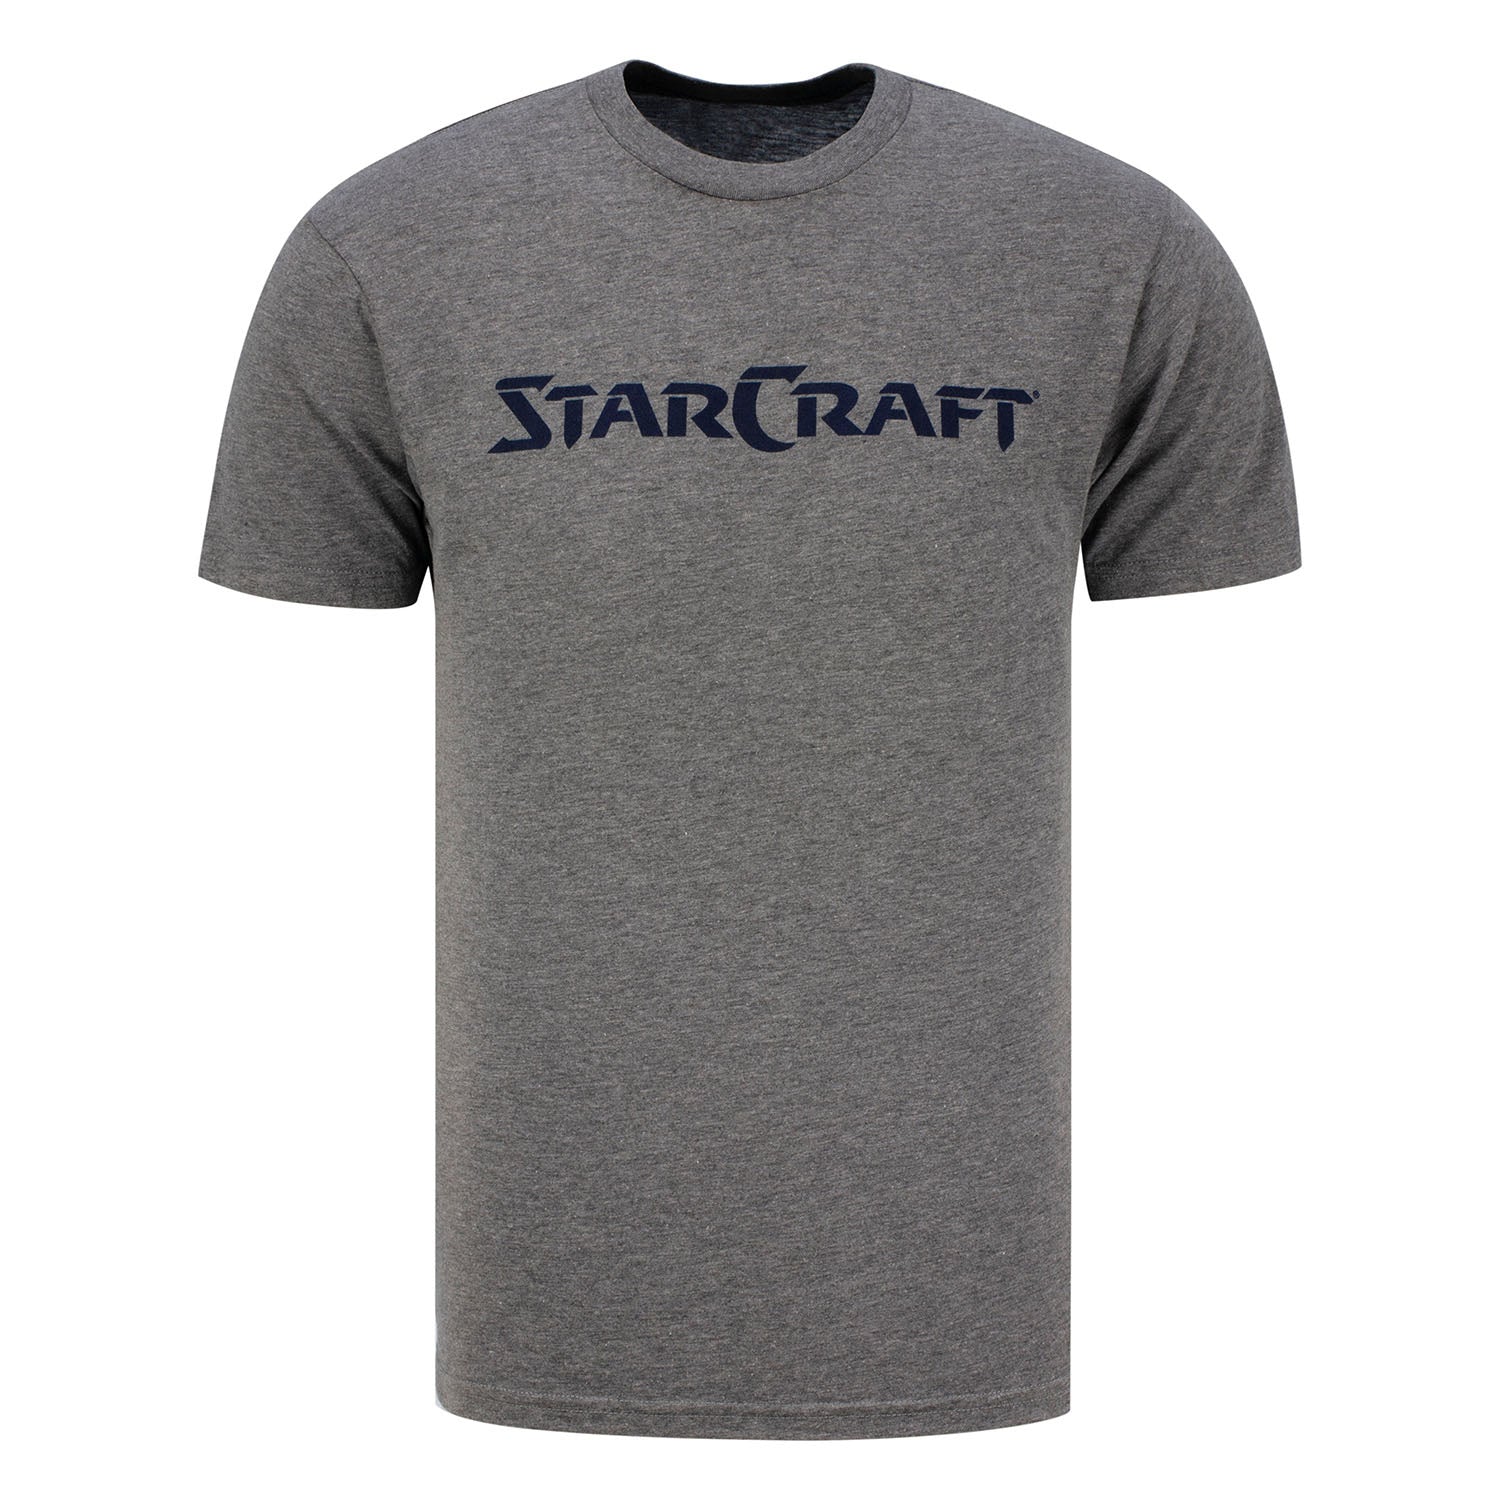 StarCraft Grey T-Shirt - Front View with StarCraft Logo